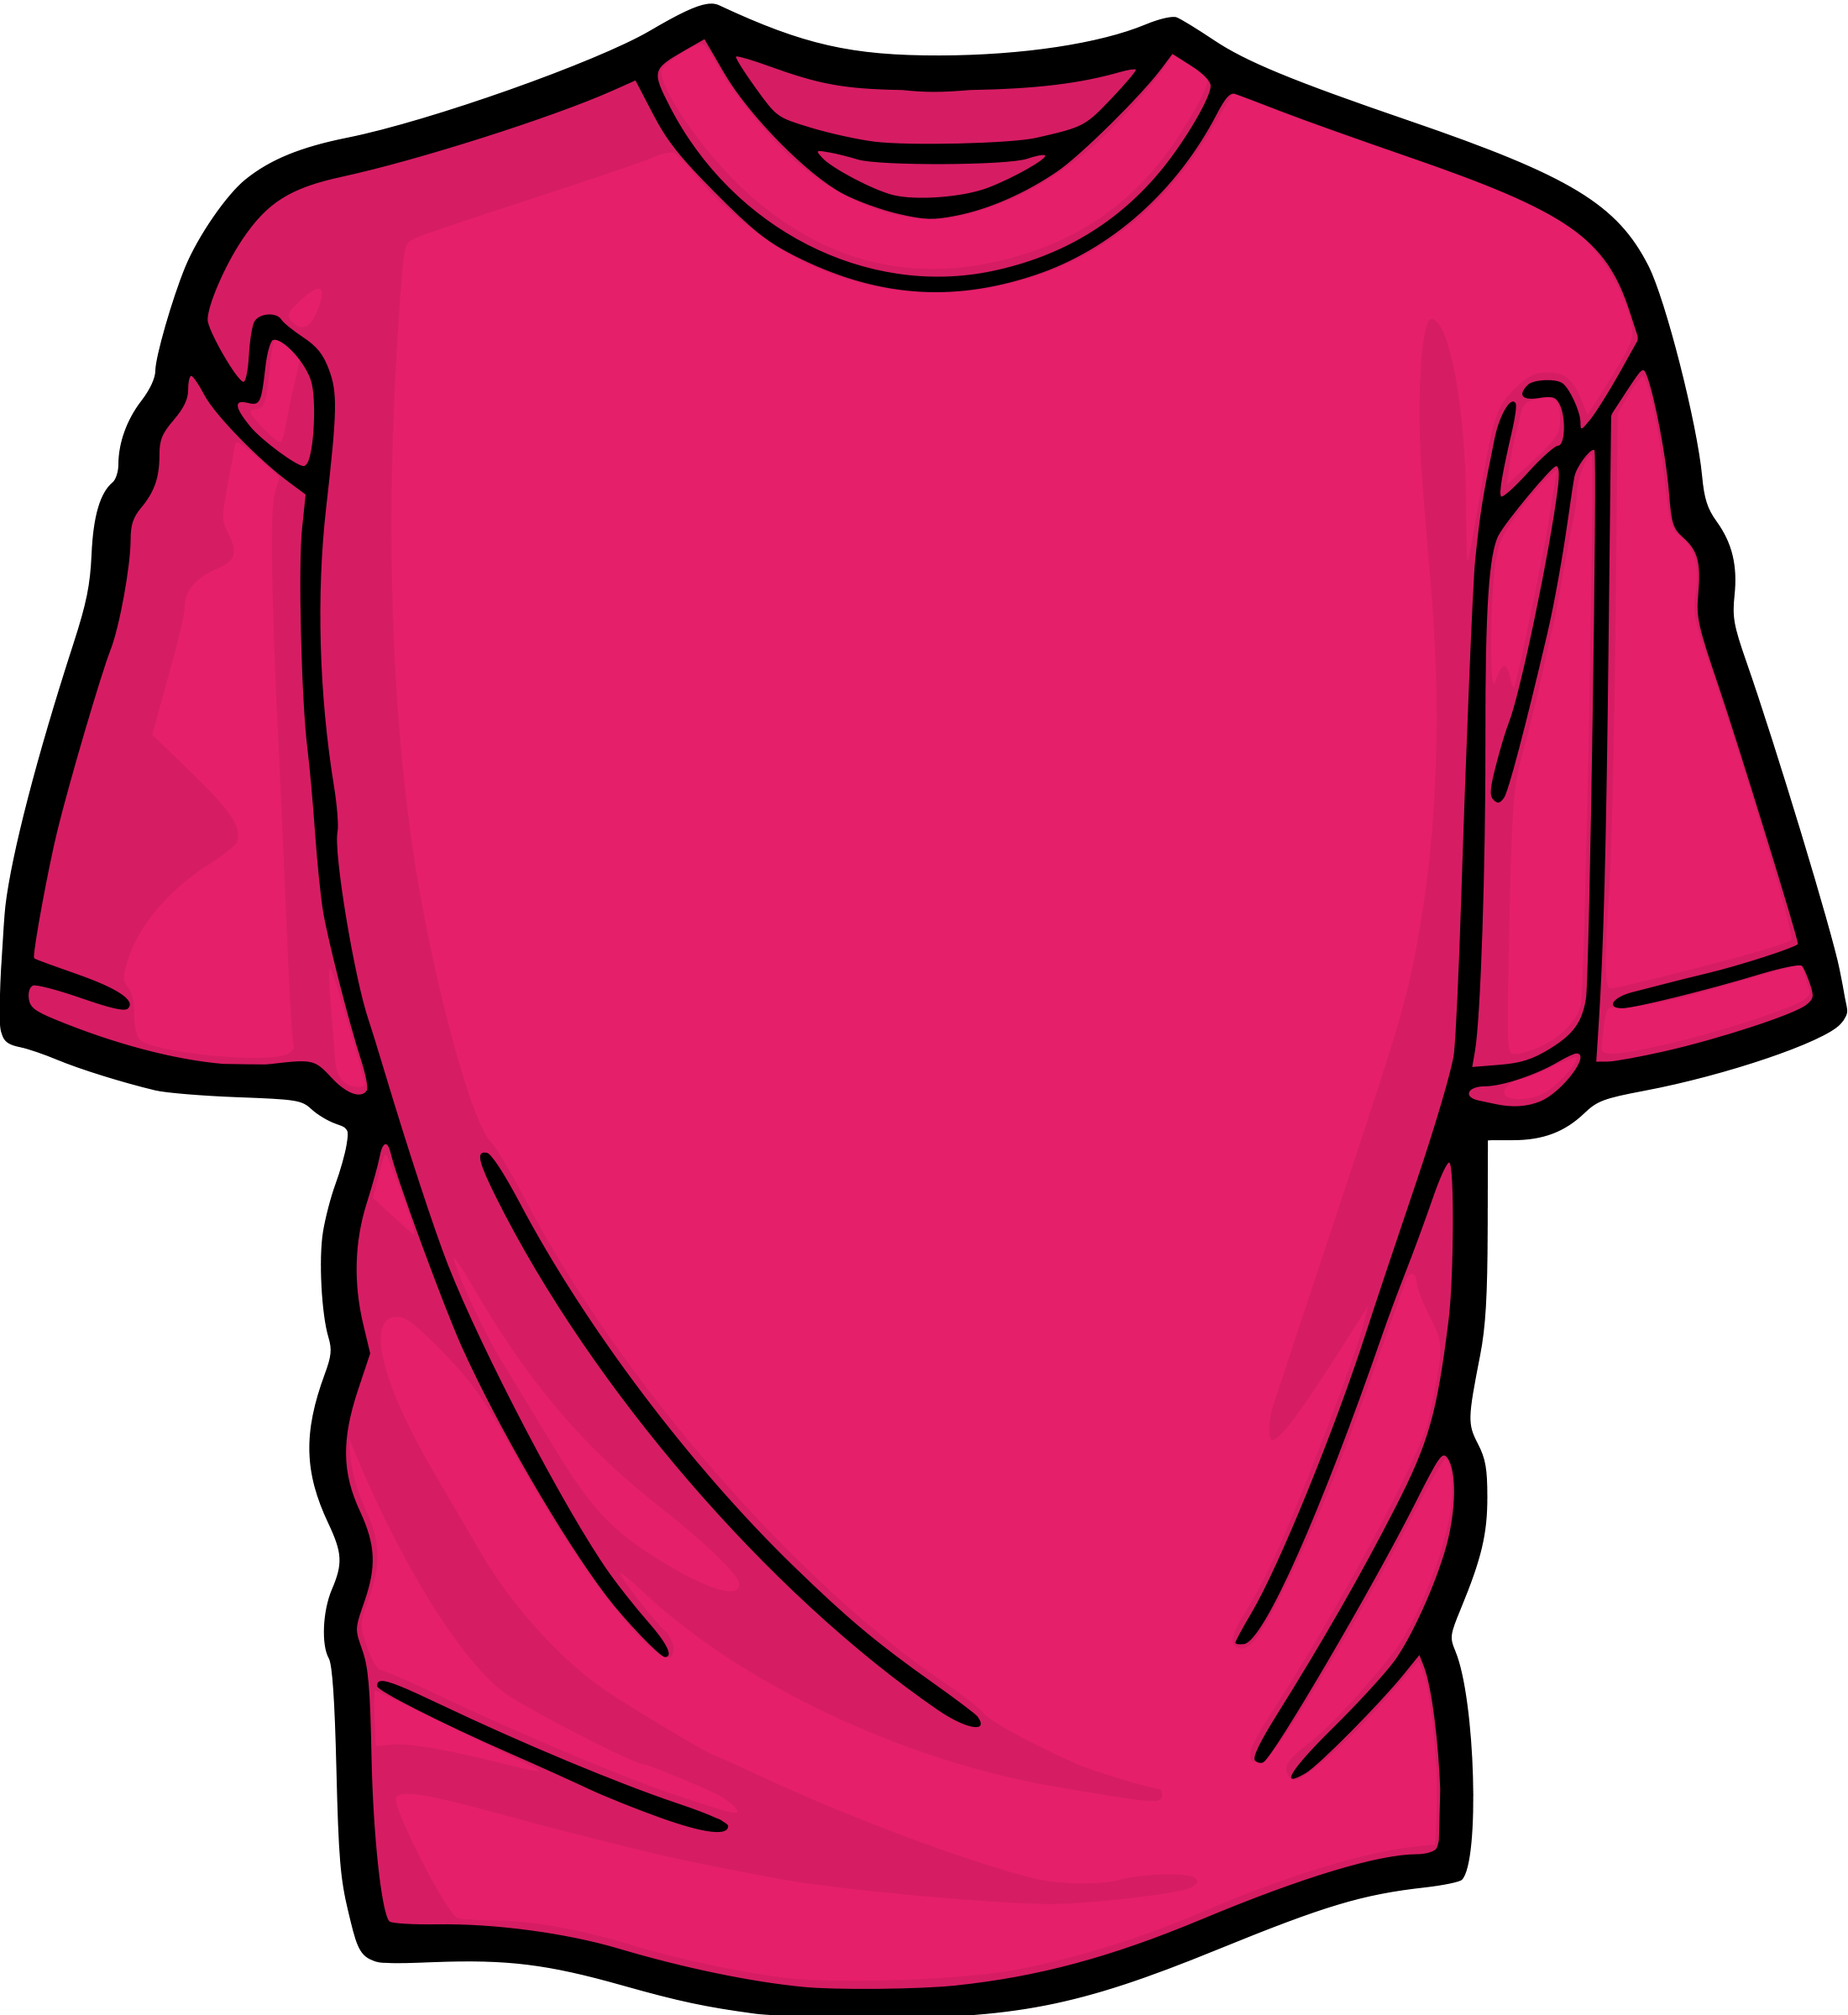 T Shirt Clip Art Outline